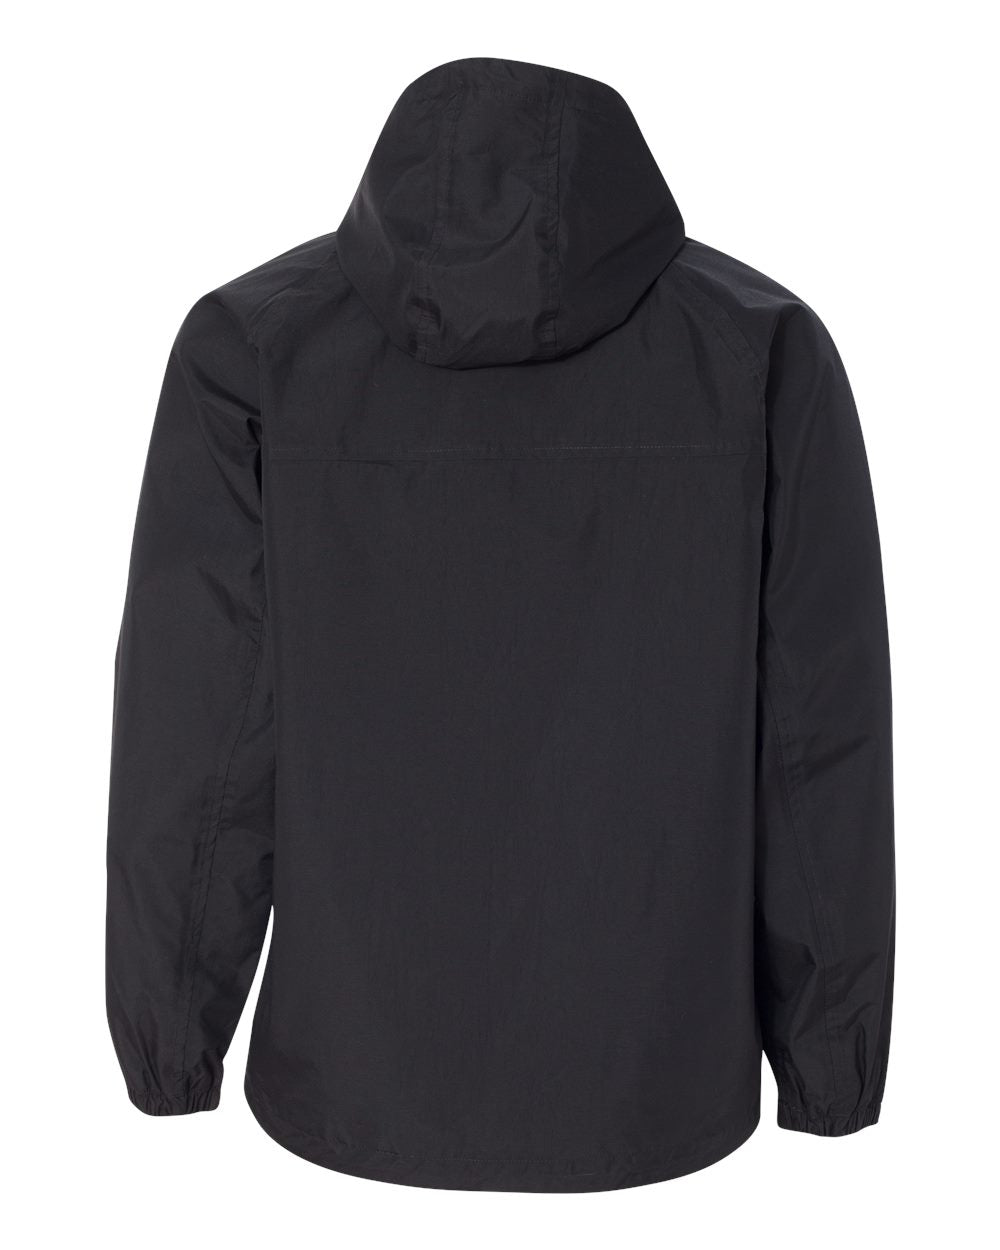 DRI DUCK Torrent Waterproof Hooded Jacket 5335 #color_Black